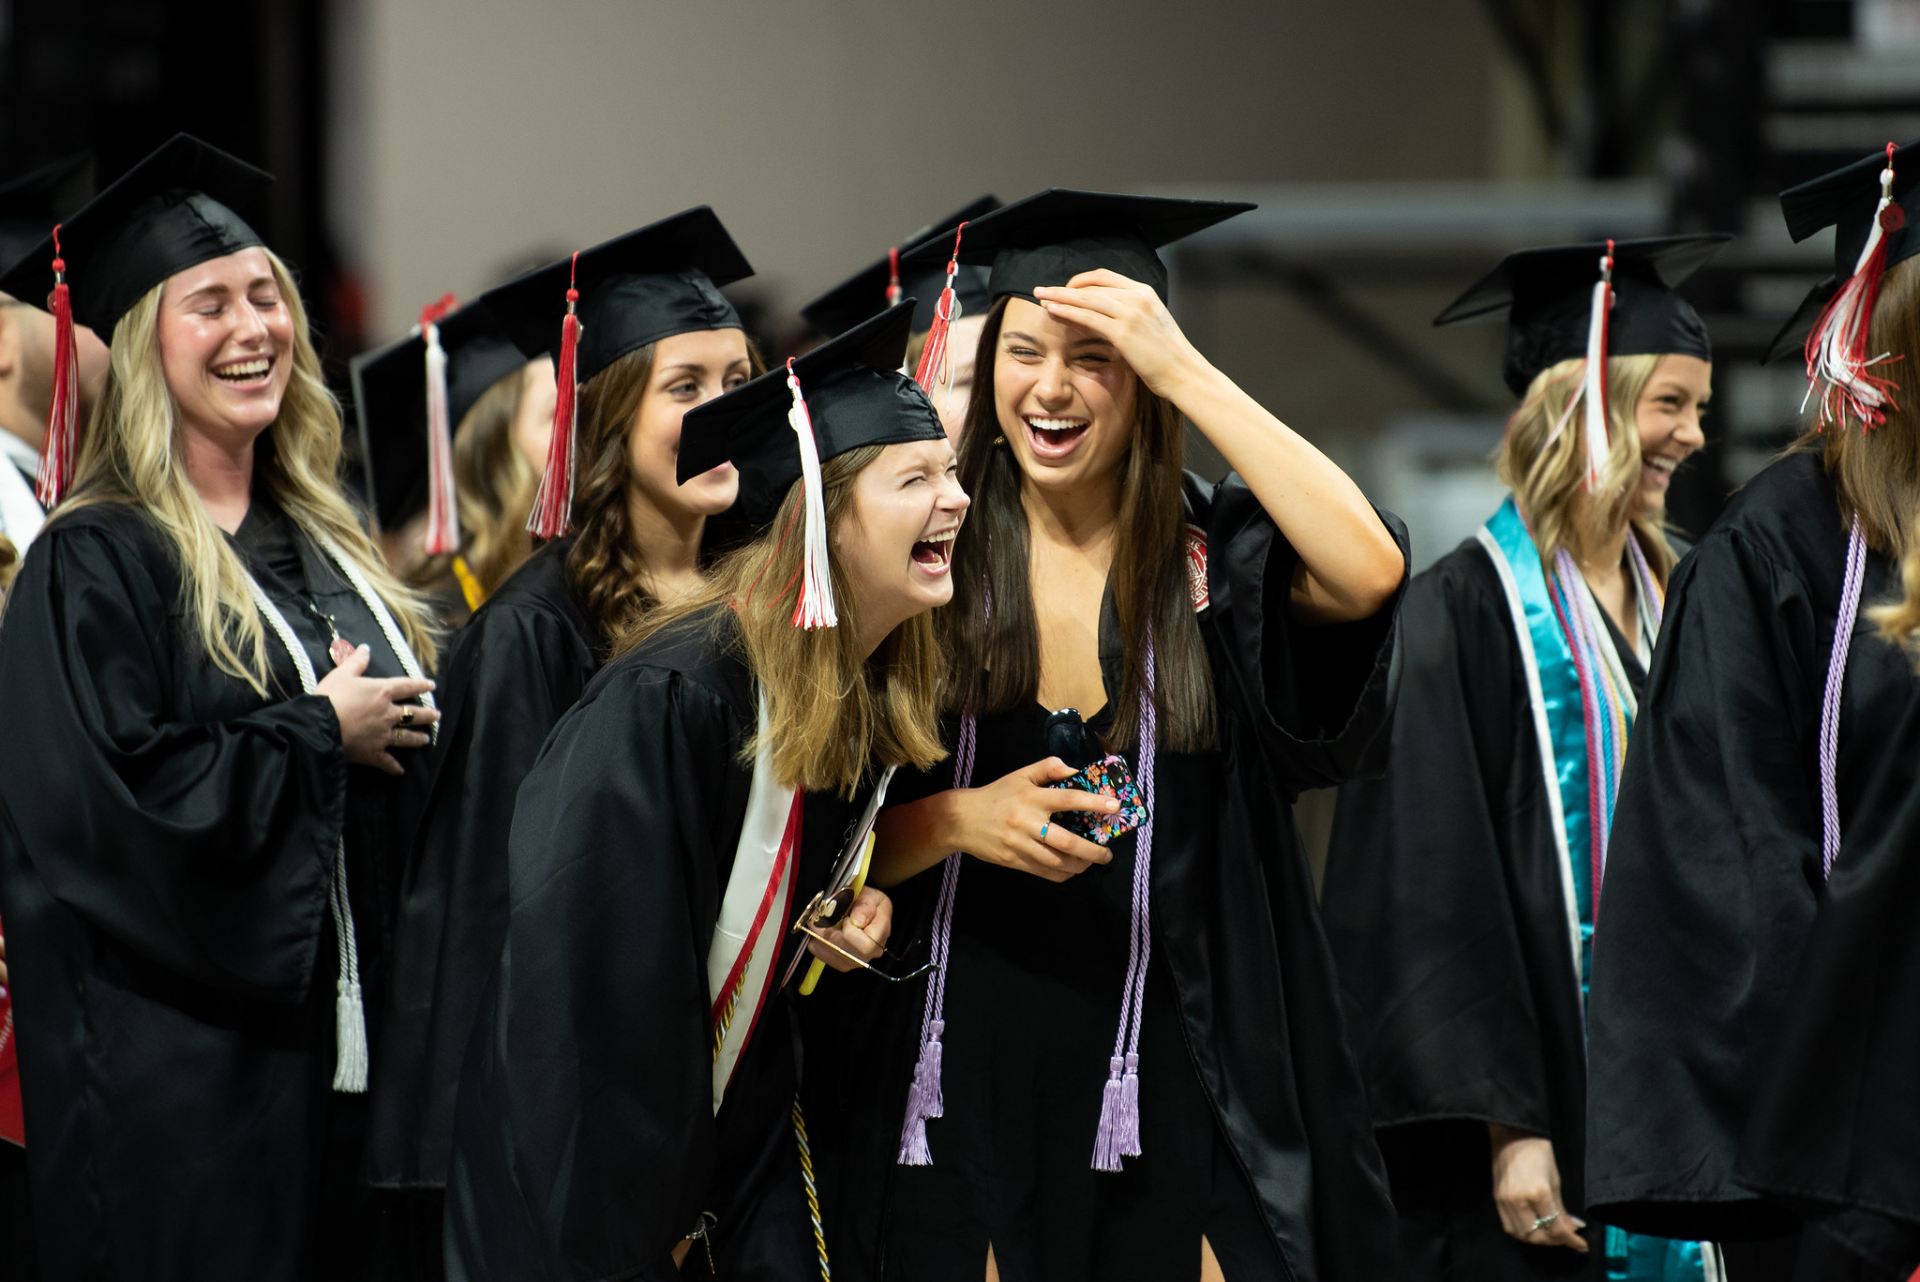 Graduates laughing while walking to their seats.